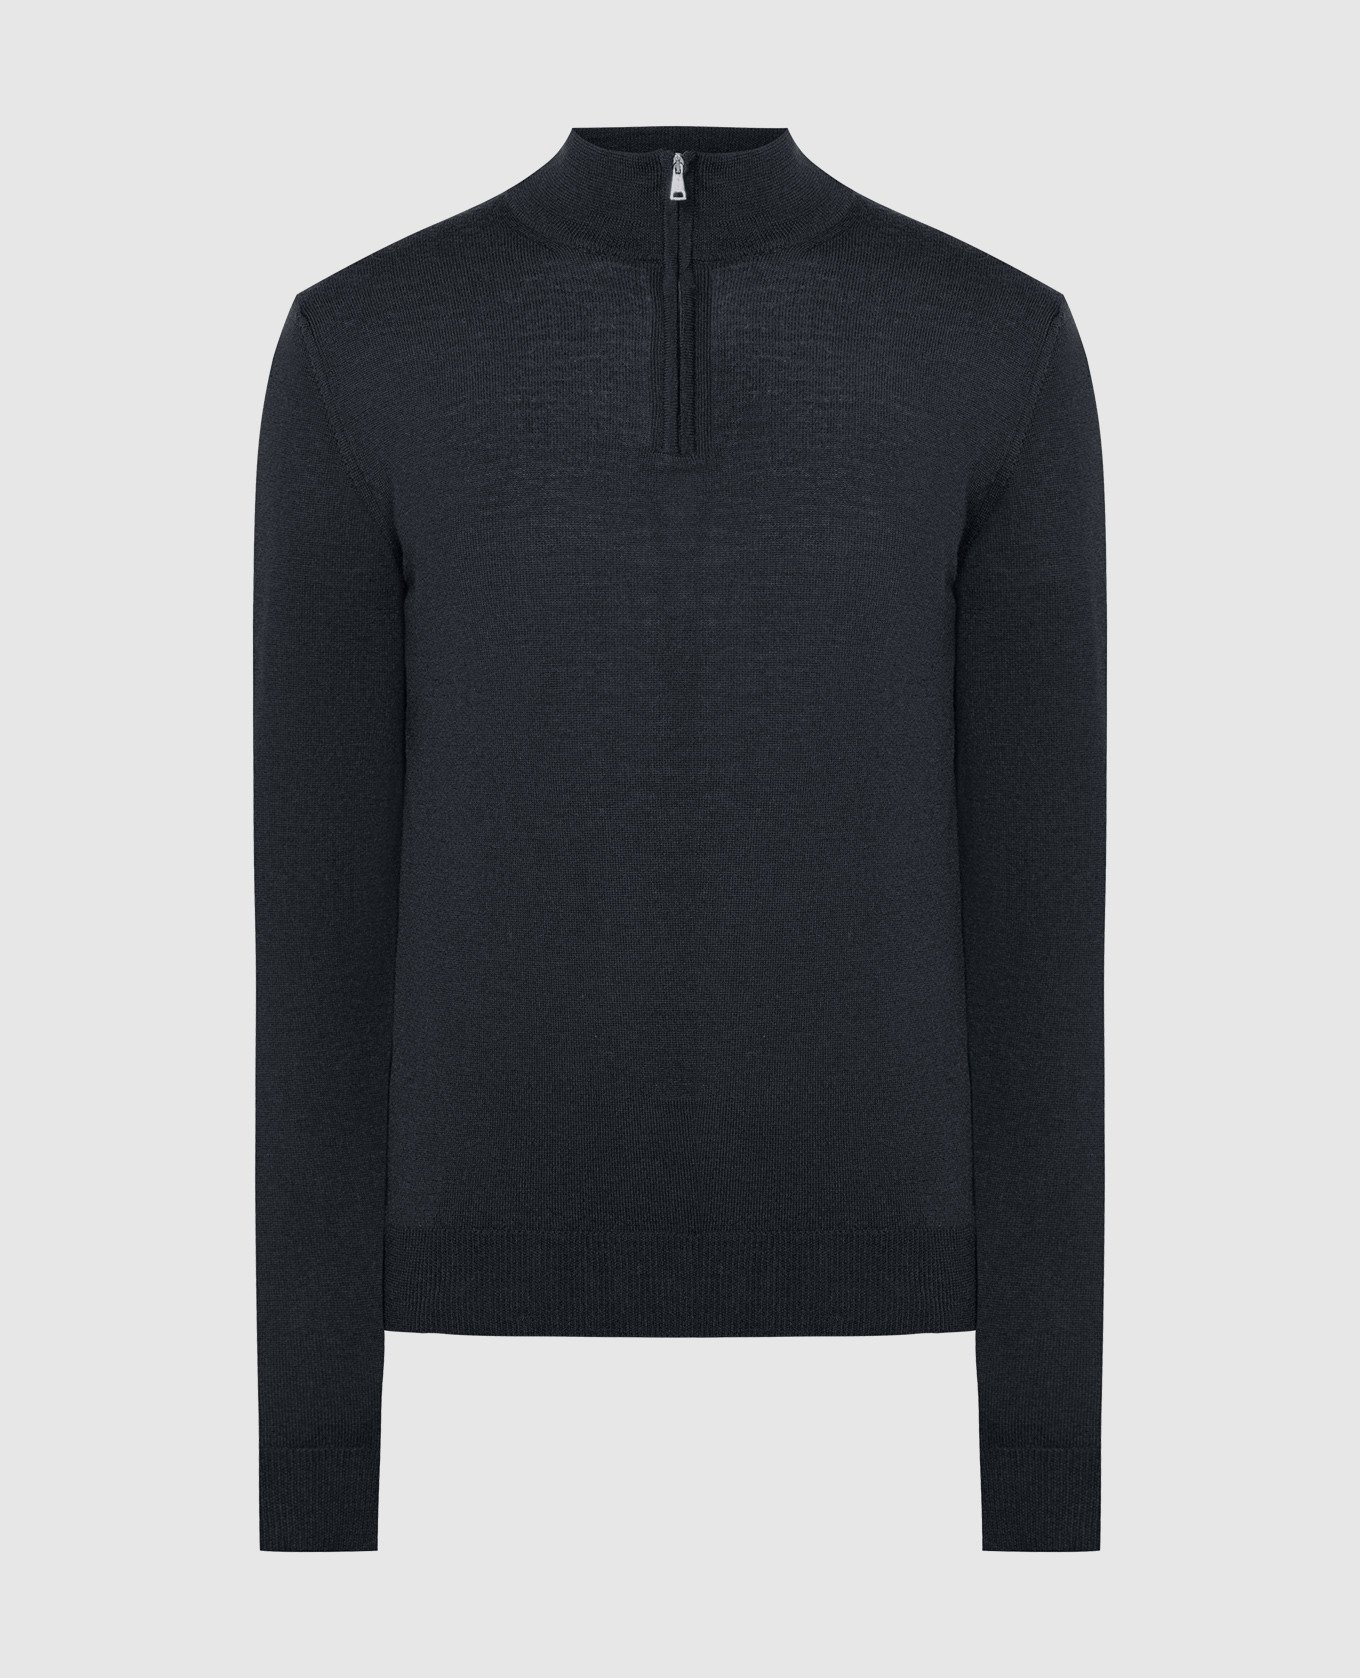 Black woolen jumper